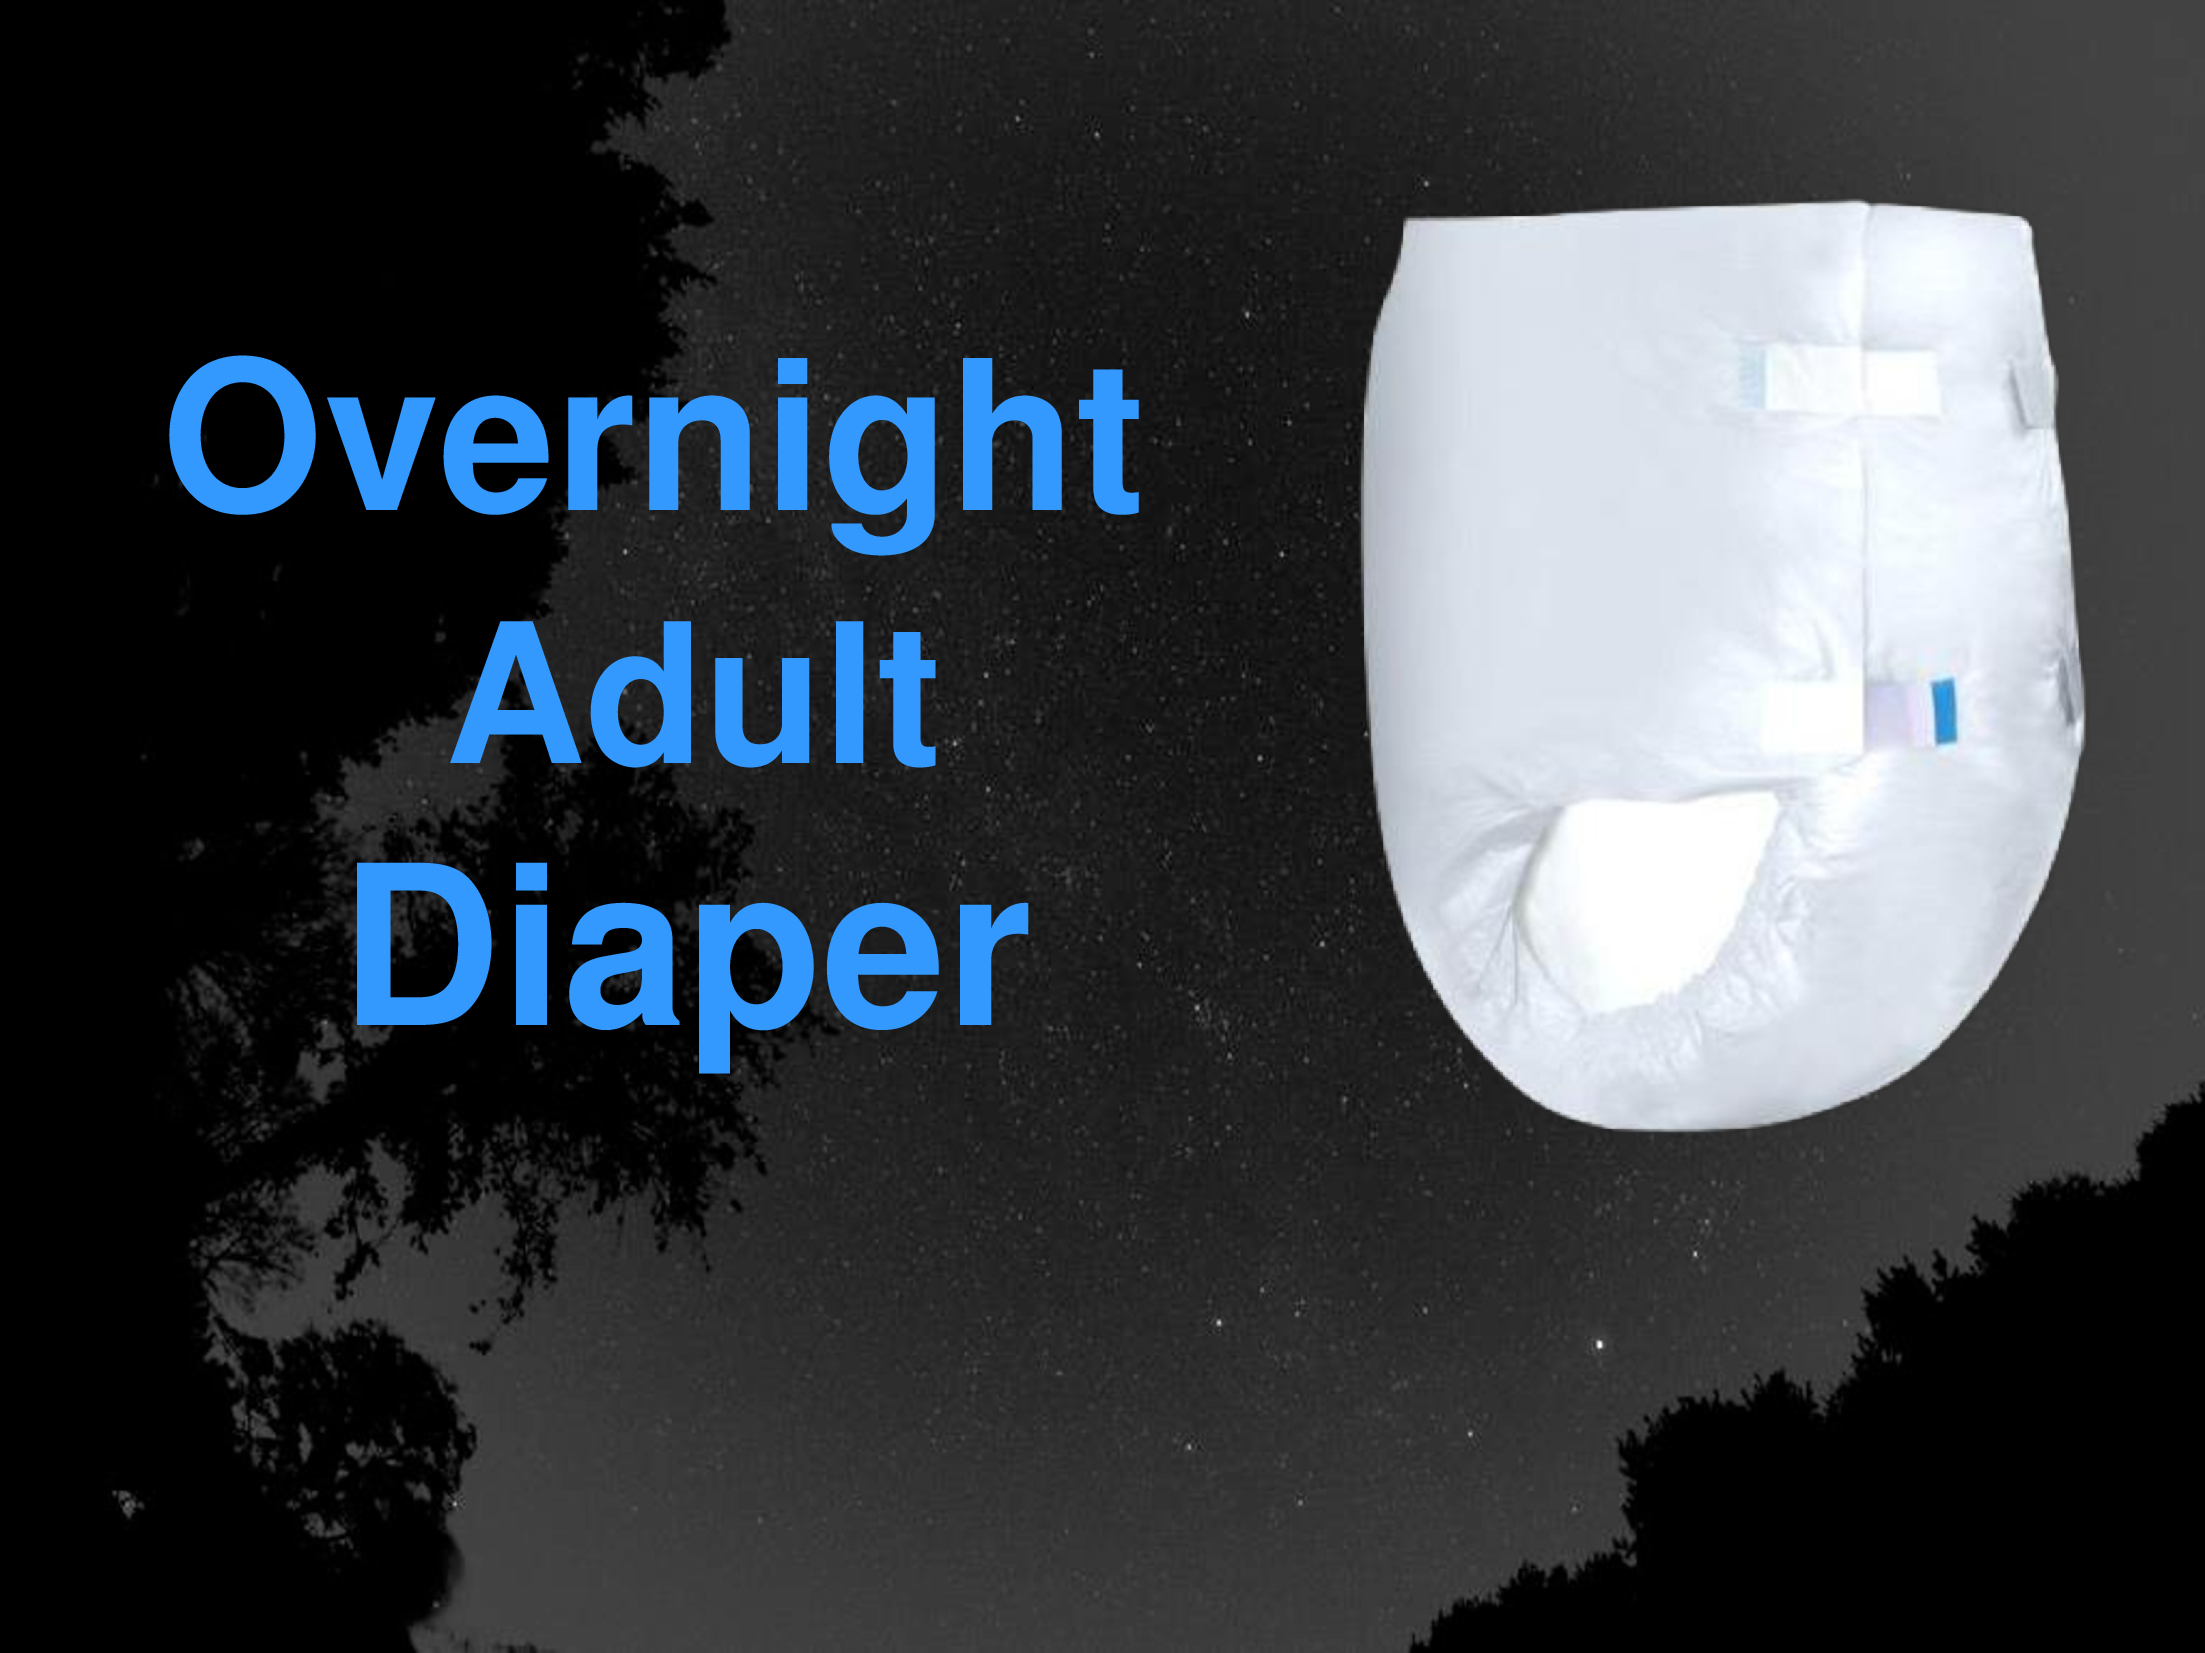 Overnight Adult Diaper